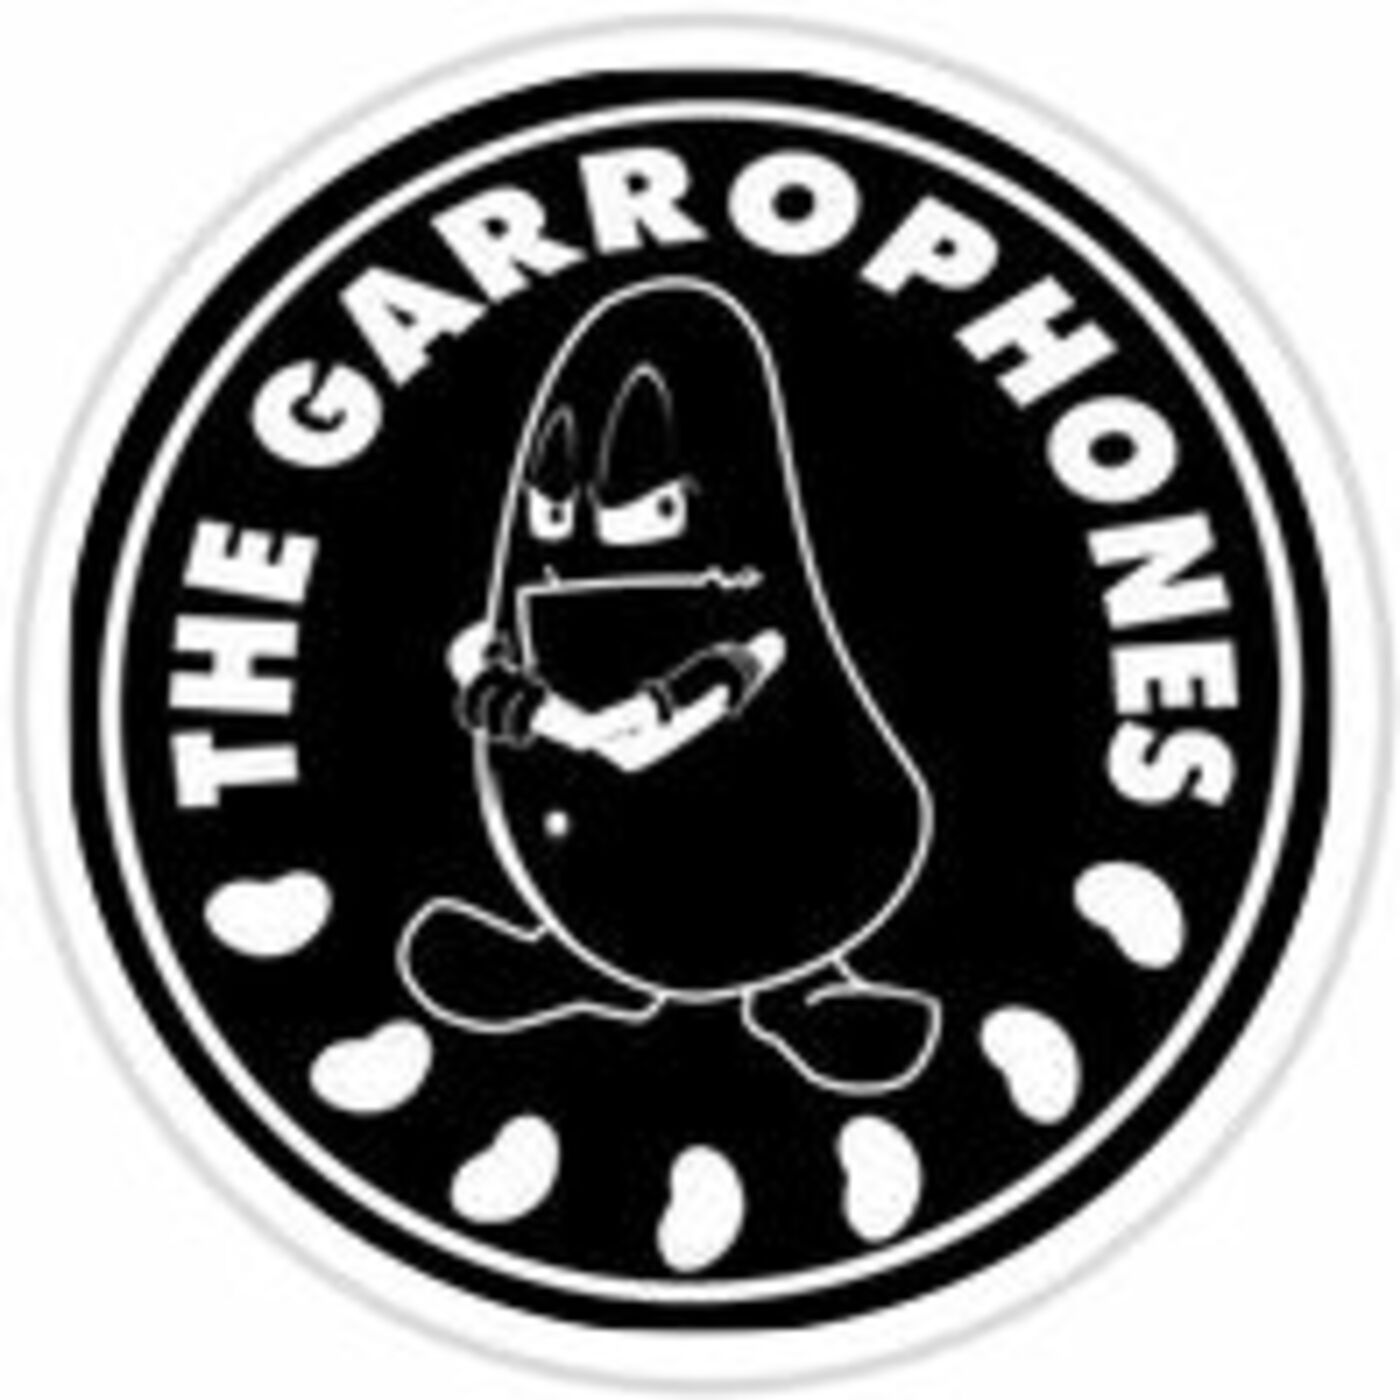 The Garrophones | musica en valencià